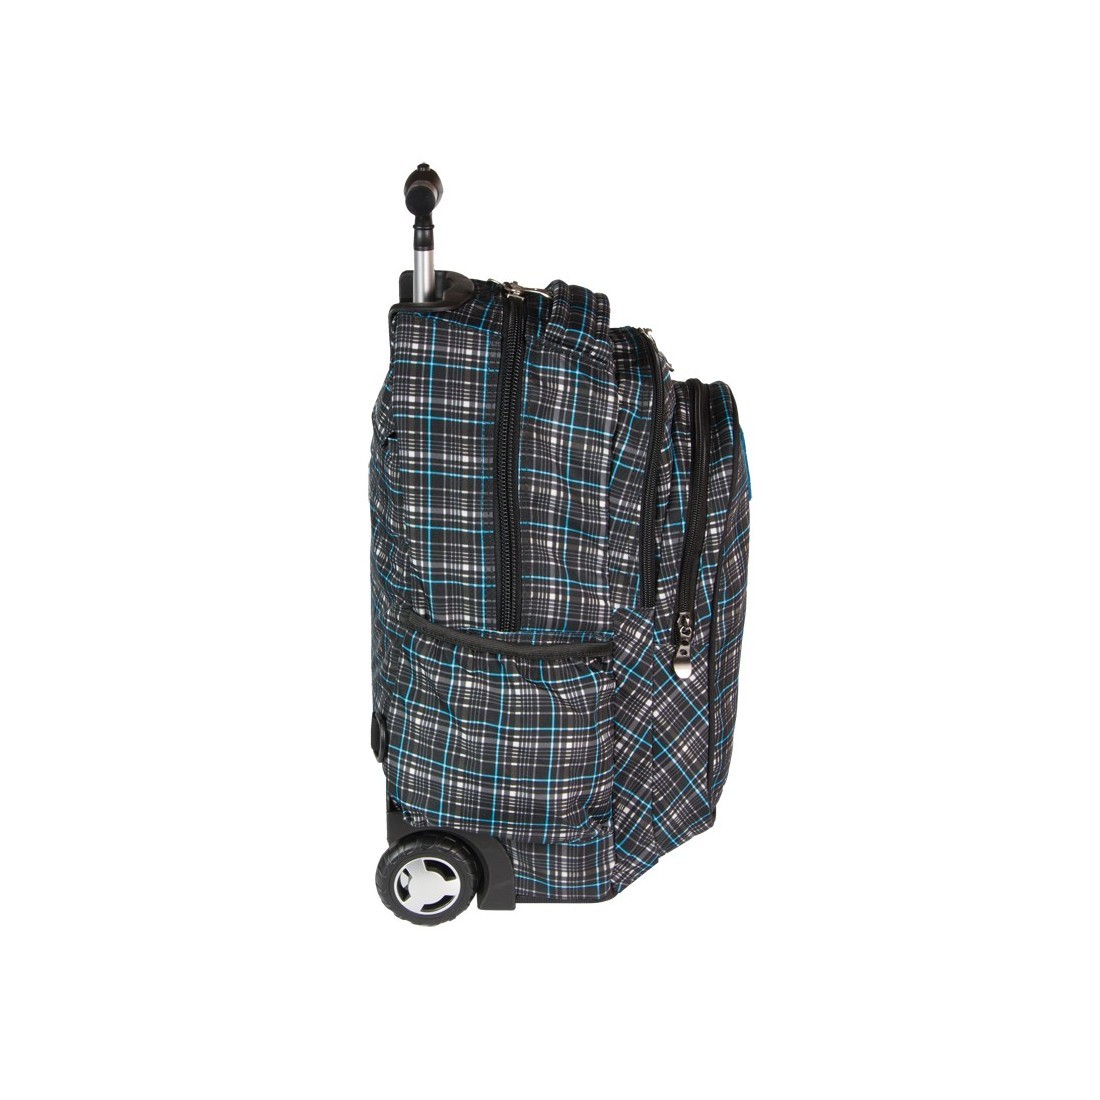 Plecak CoolPack na kółkach dla chłopca w kratkę - JUNIOR GREY SHADOW CP 191 - plecak-tornister.pl